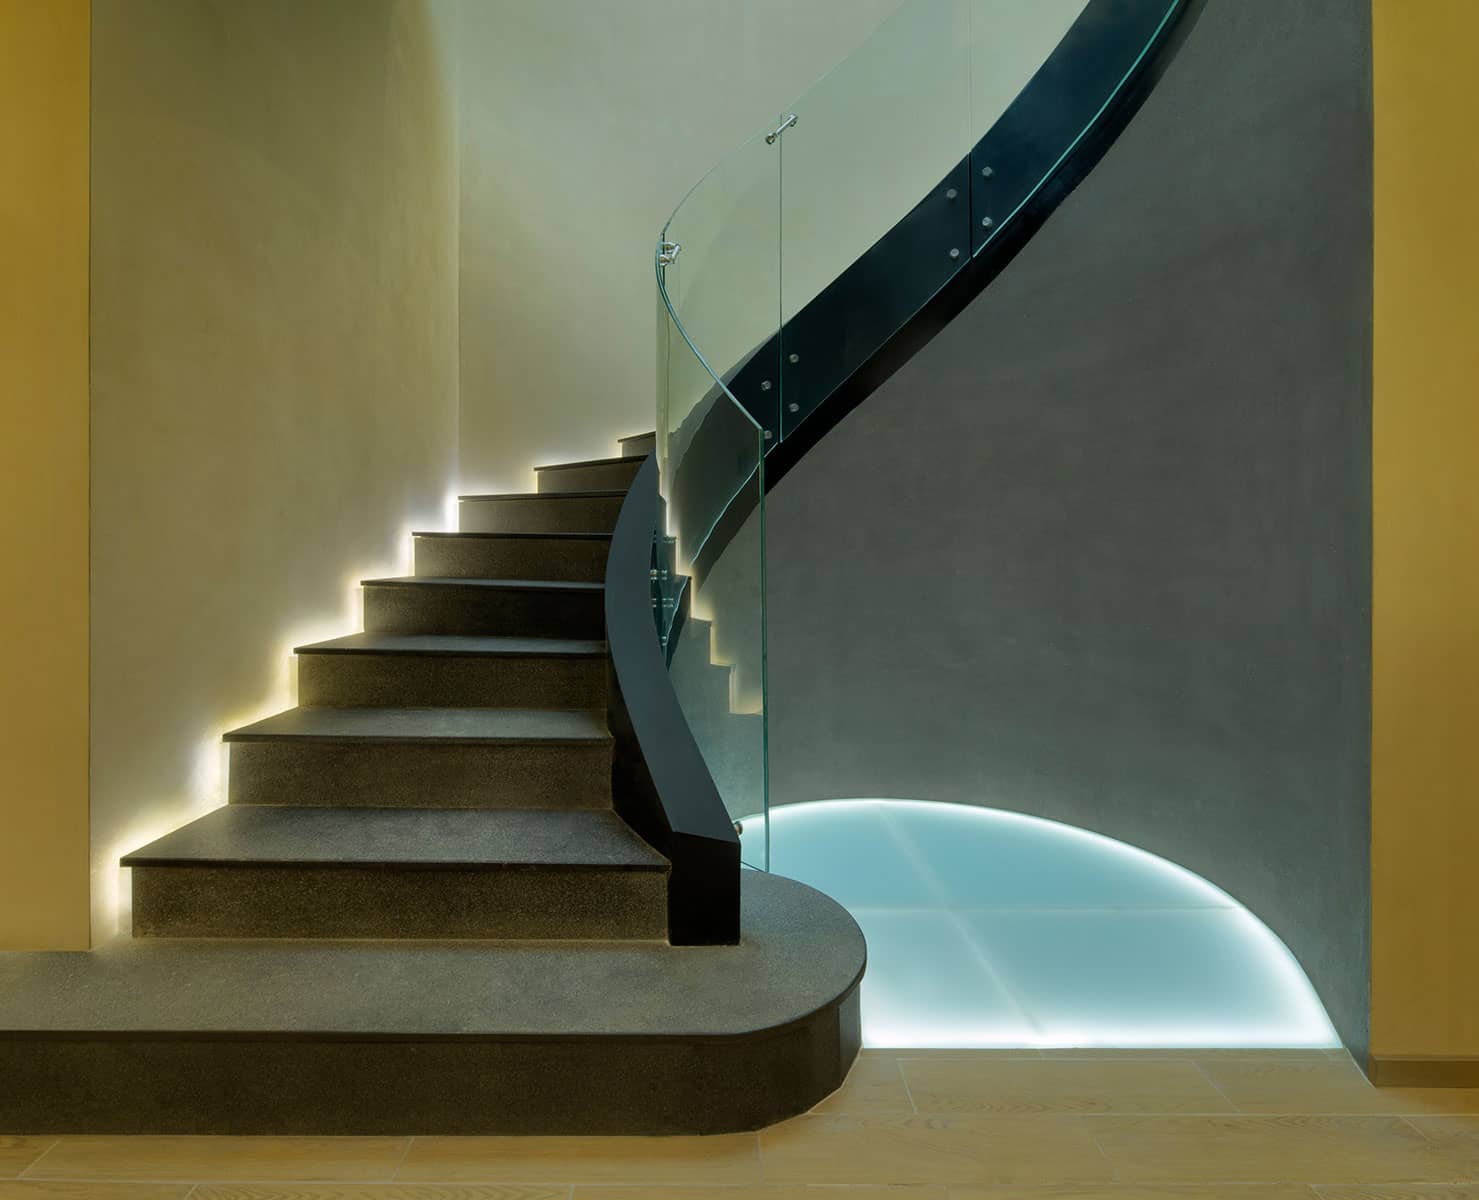 Architecture Photography Dubai: Staircase in contemporary office, Dubai.